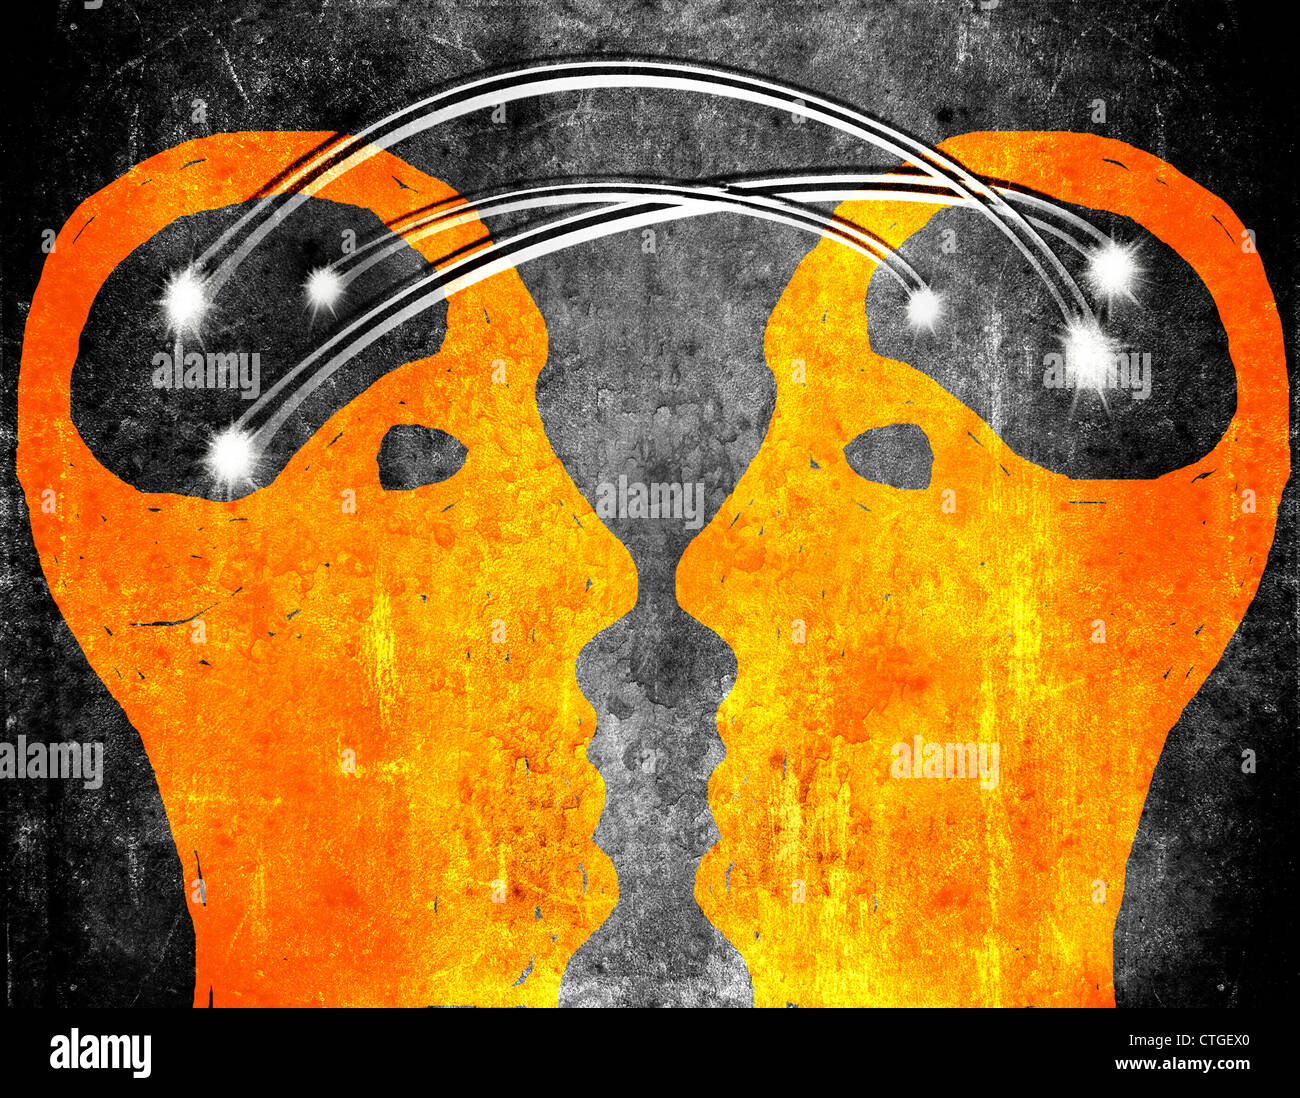 brain storming concept illustration Stock Photo